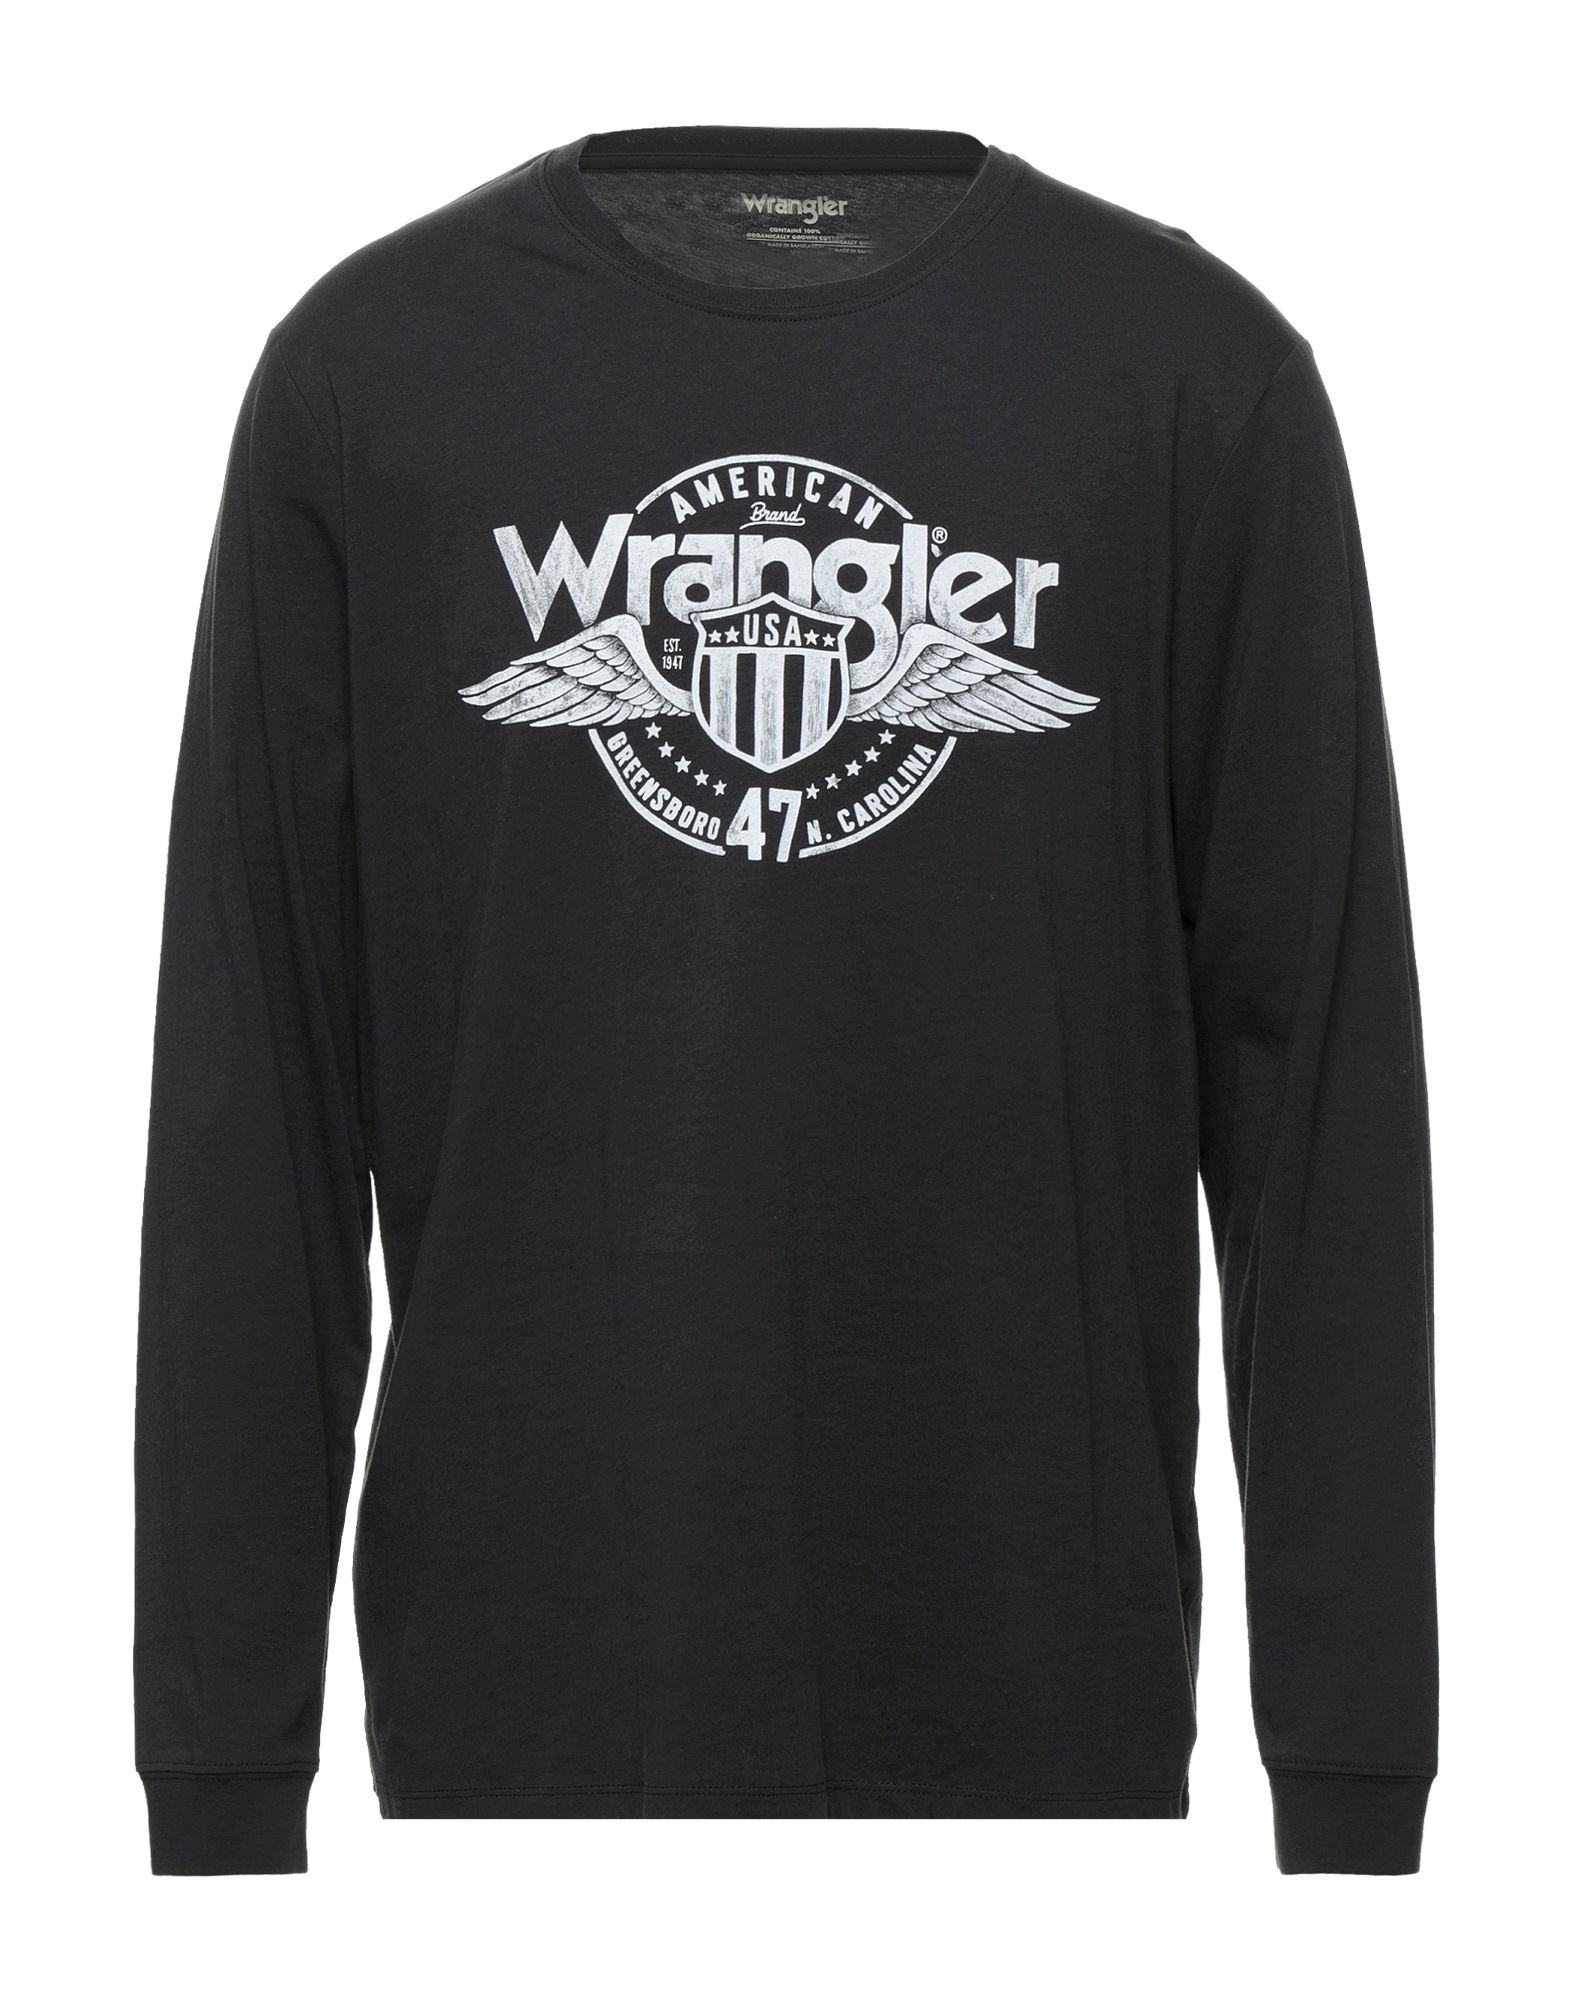 Wrangler T-shirts In Grey